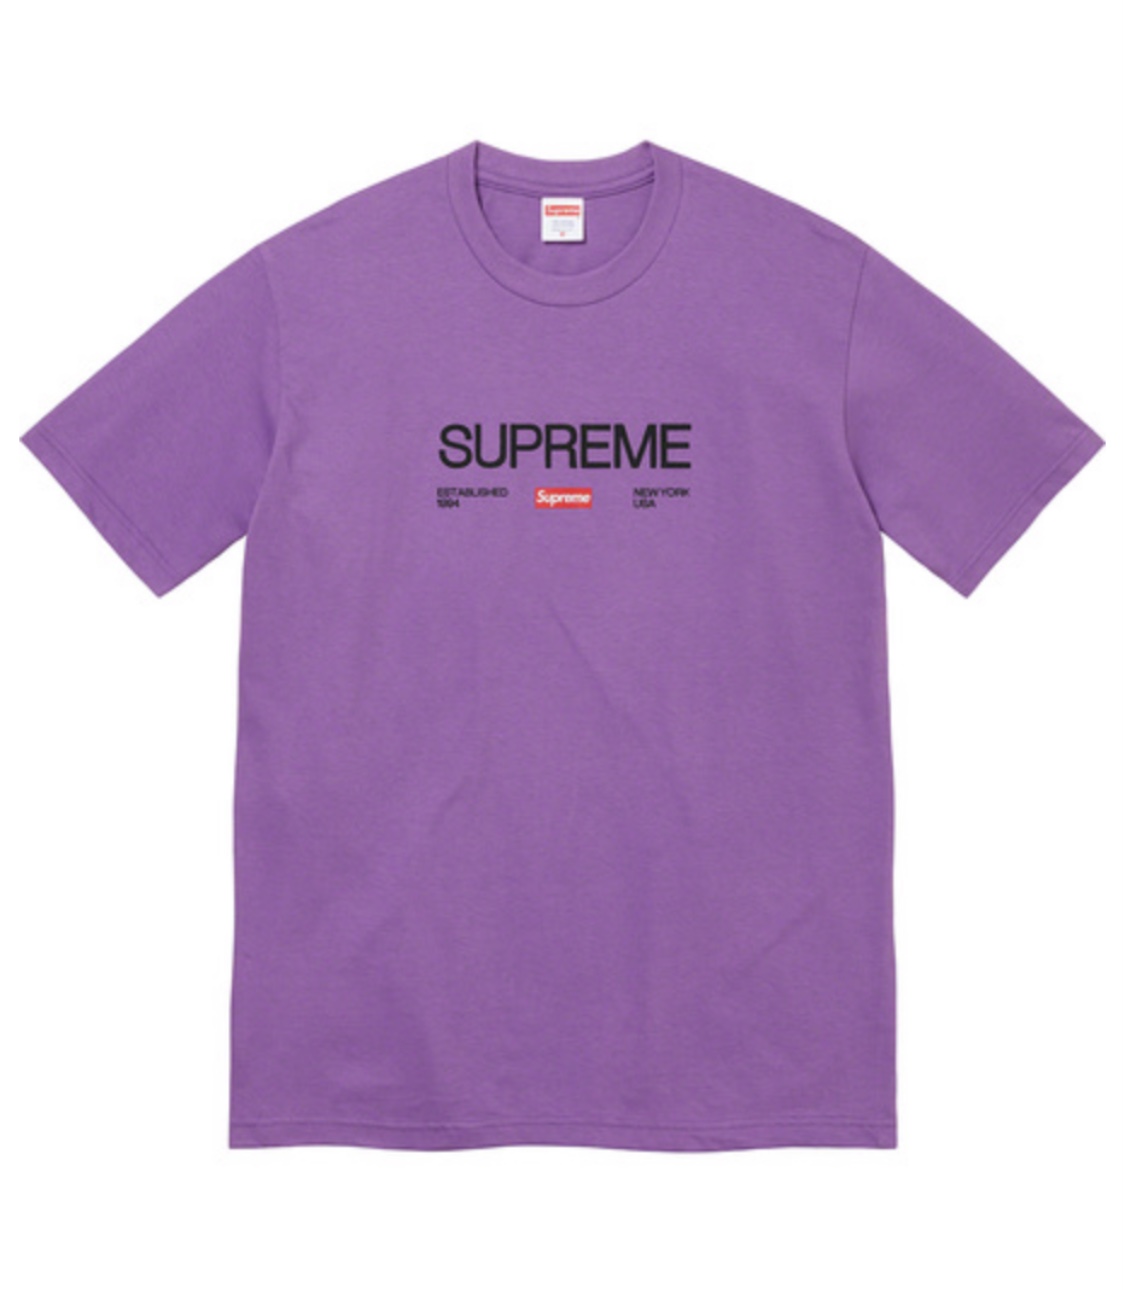 Supreme Est. 1994 Tee - Purple